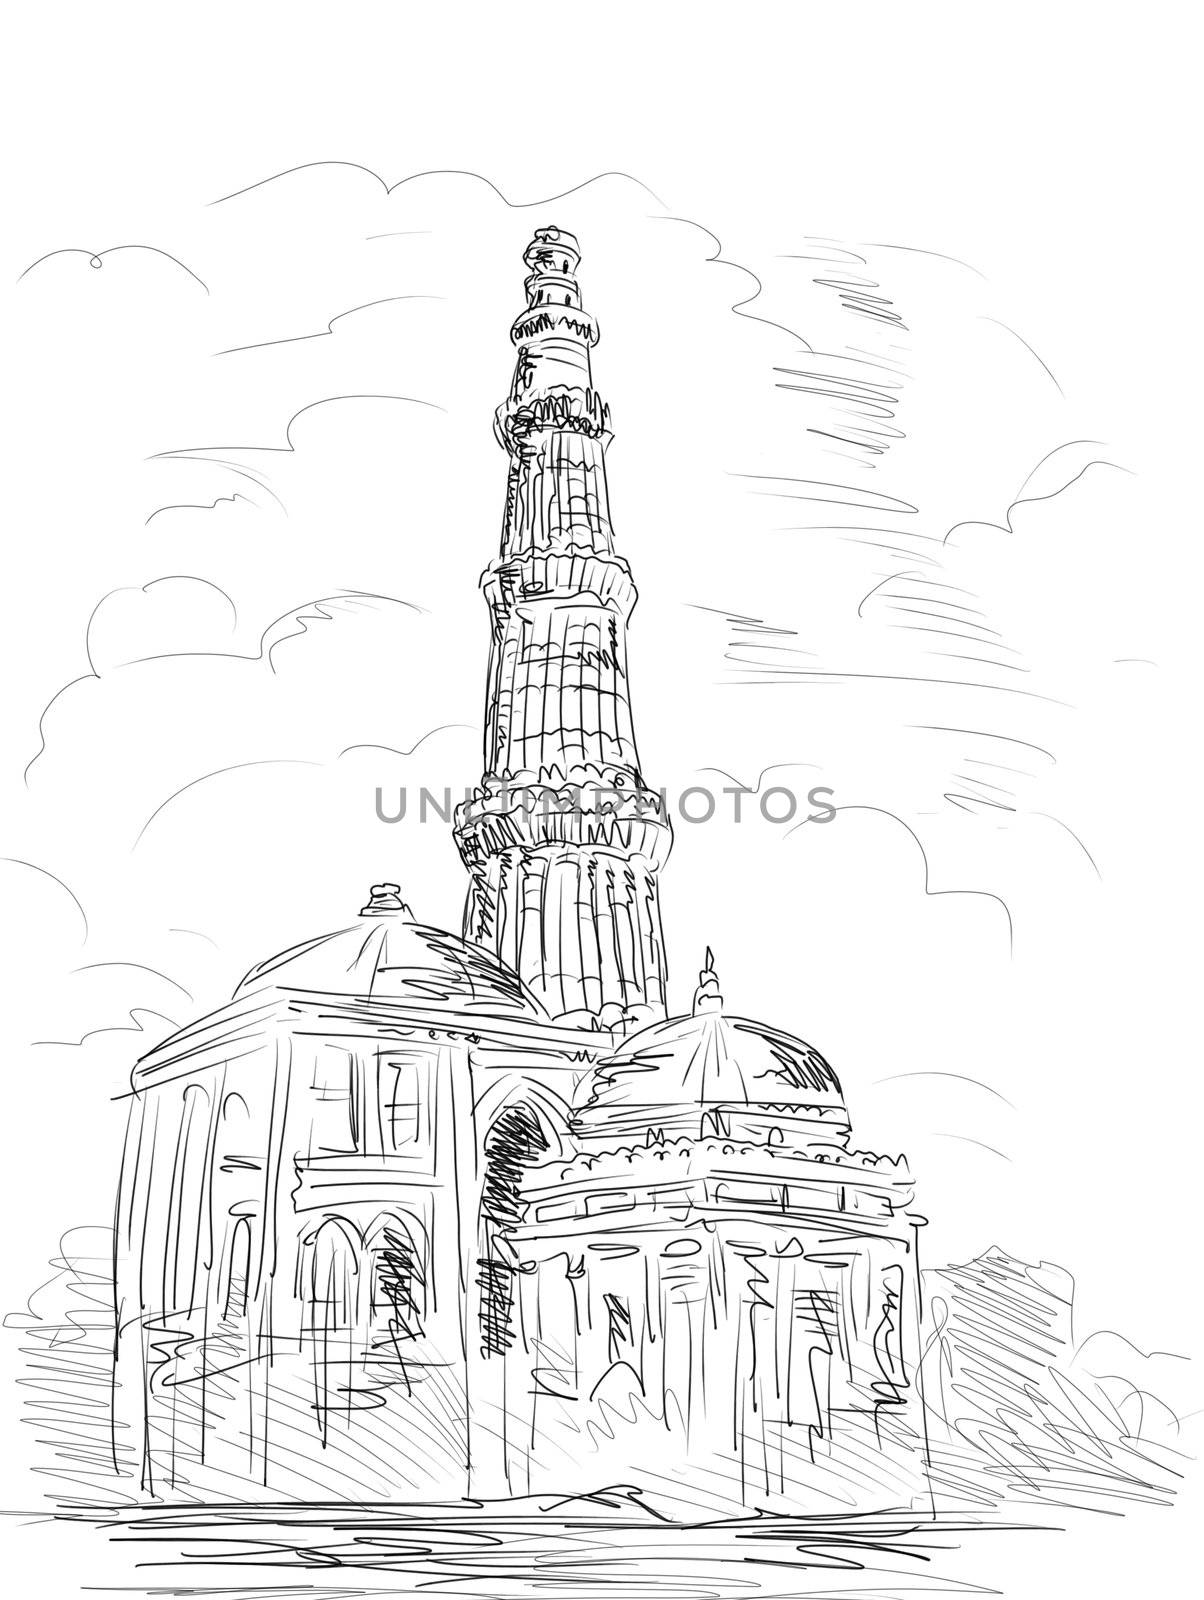 hand drawn illustration of the Qutub Minara tower Delhi India